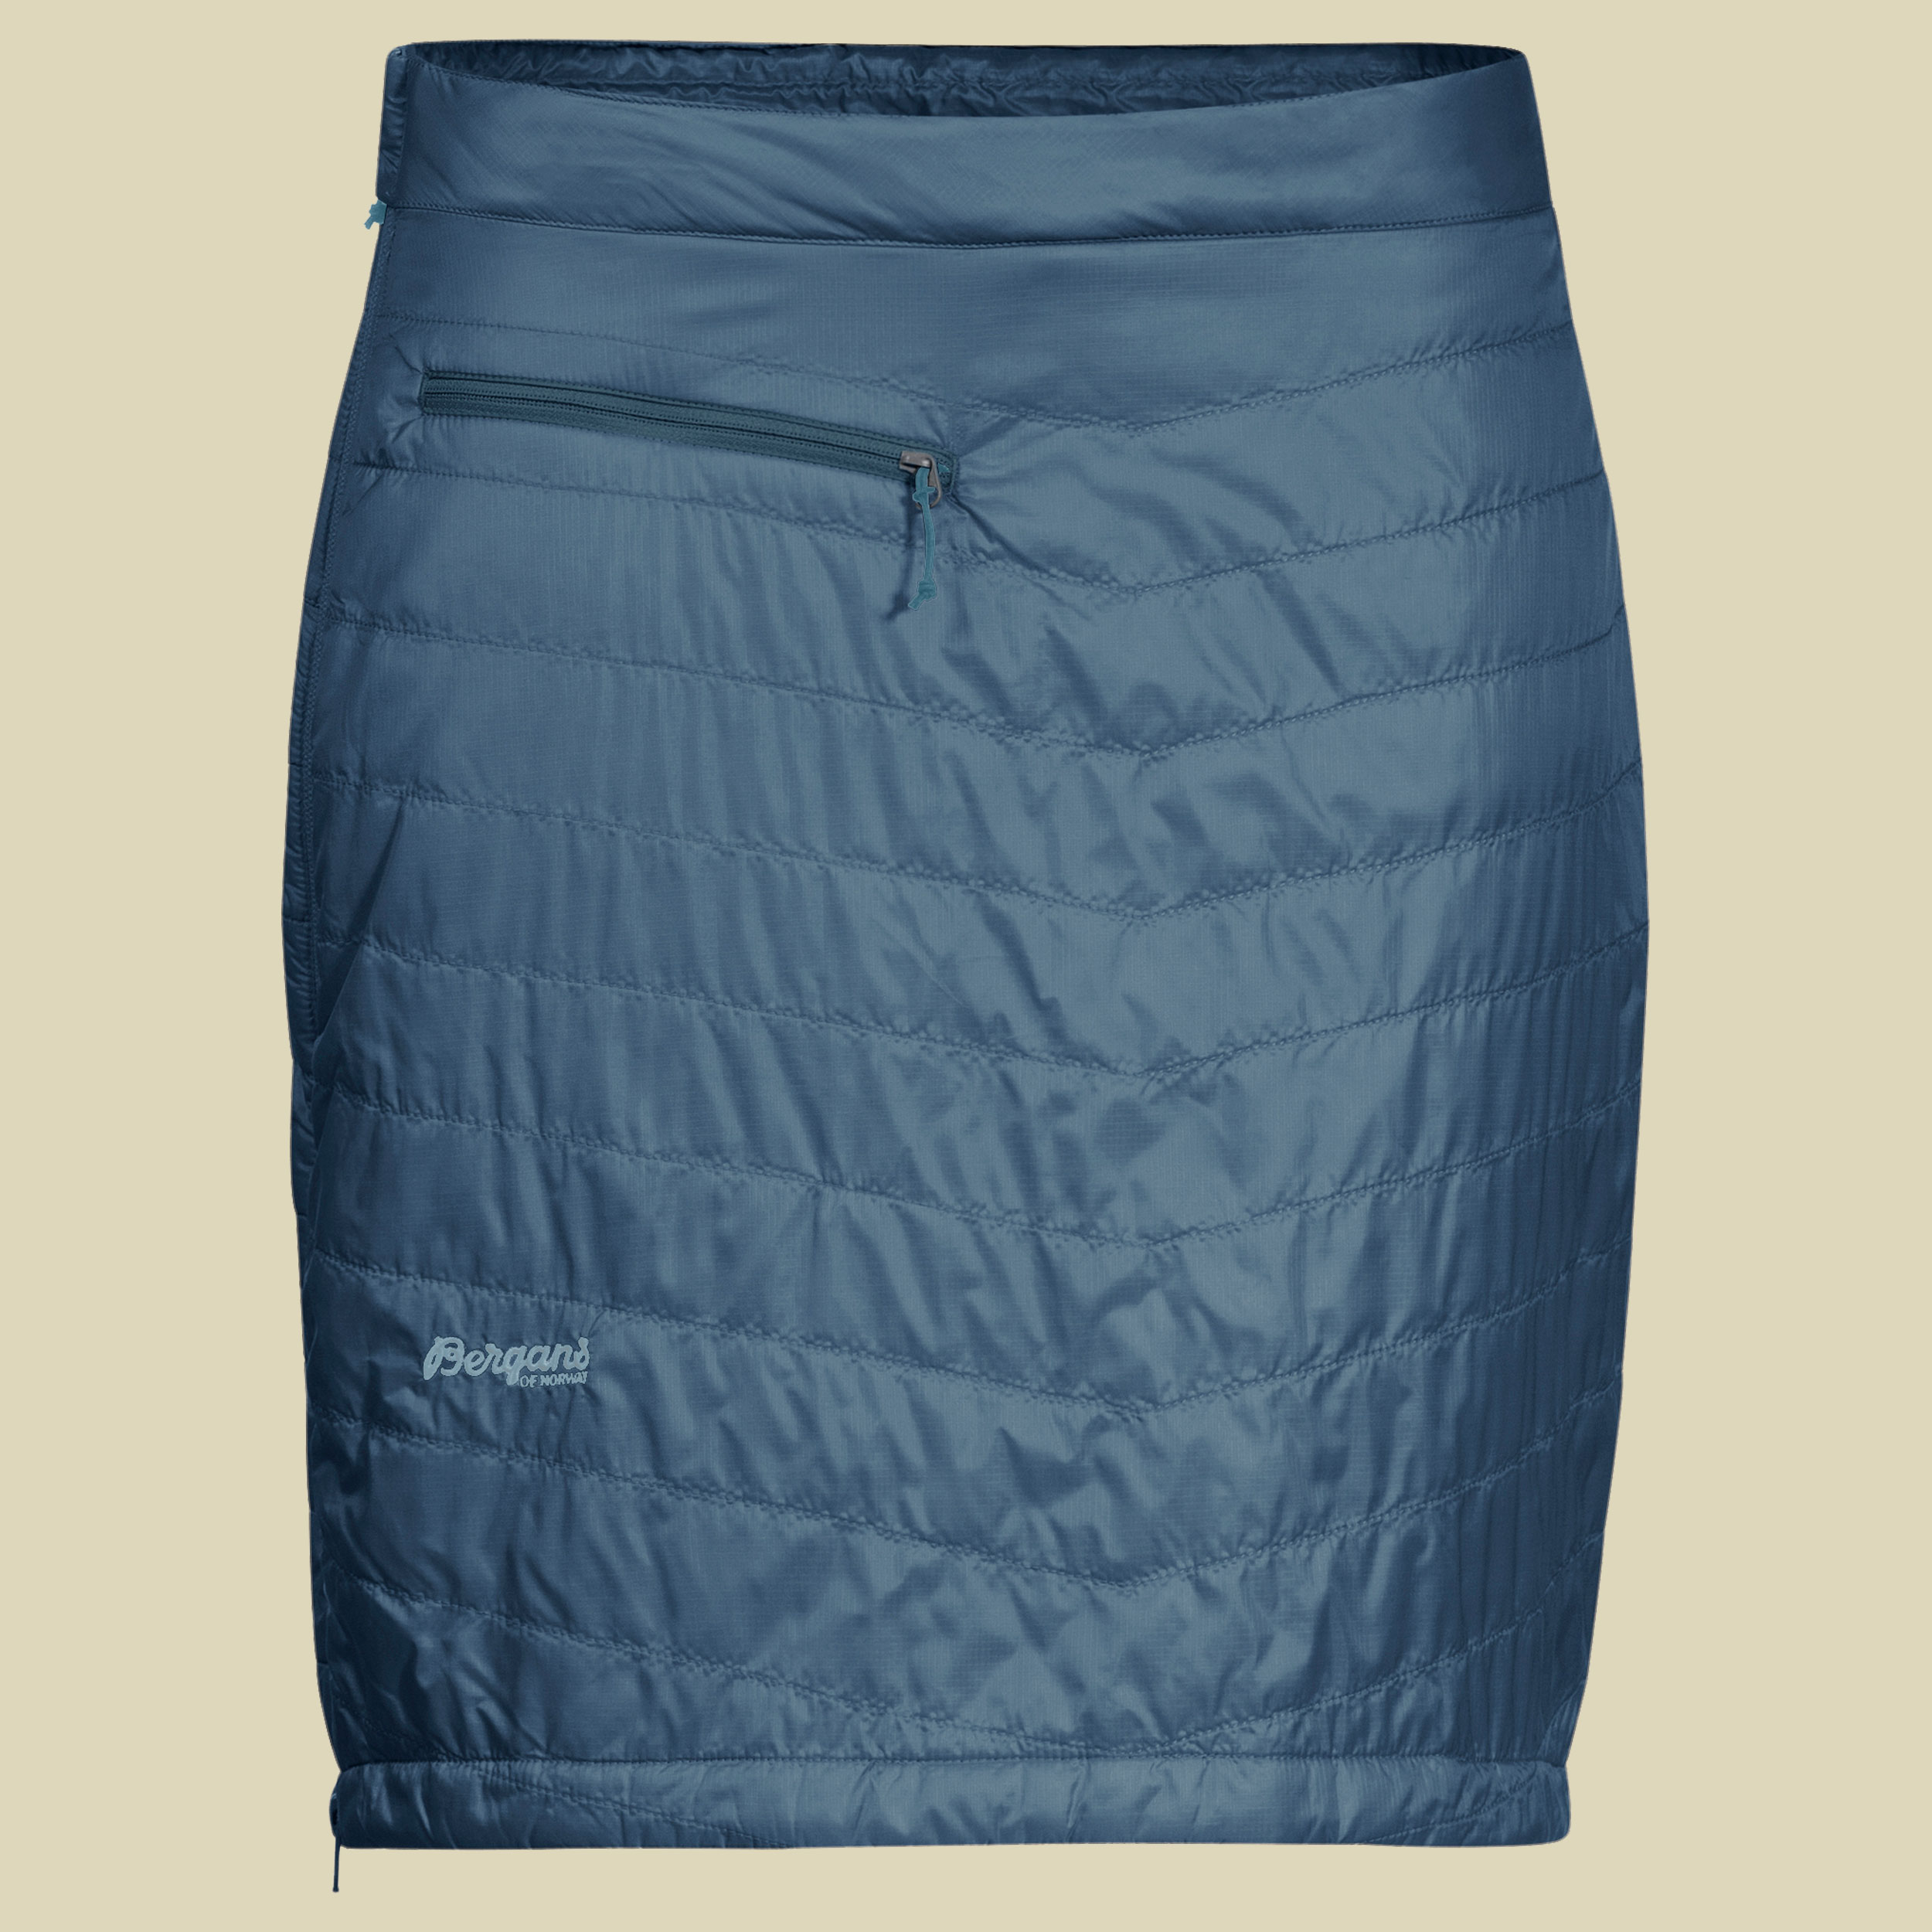 Roros Insulated Skirt Größe S Farbe orion blue